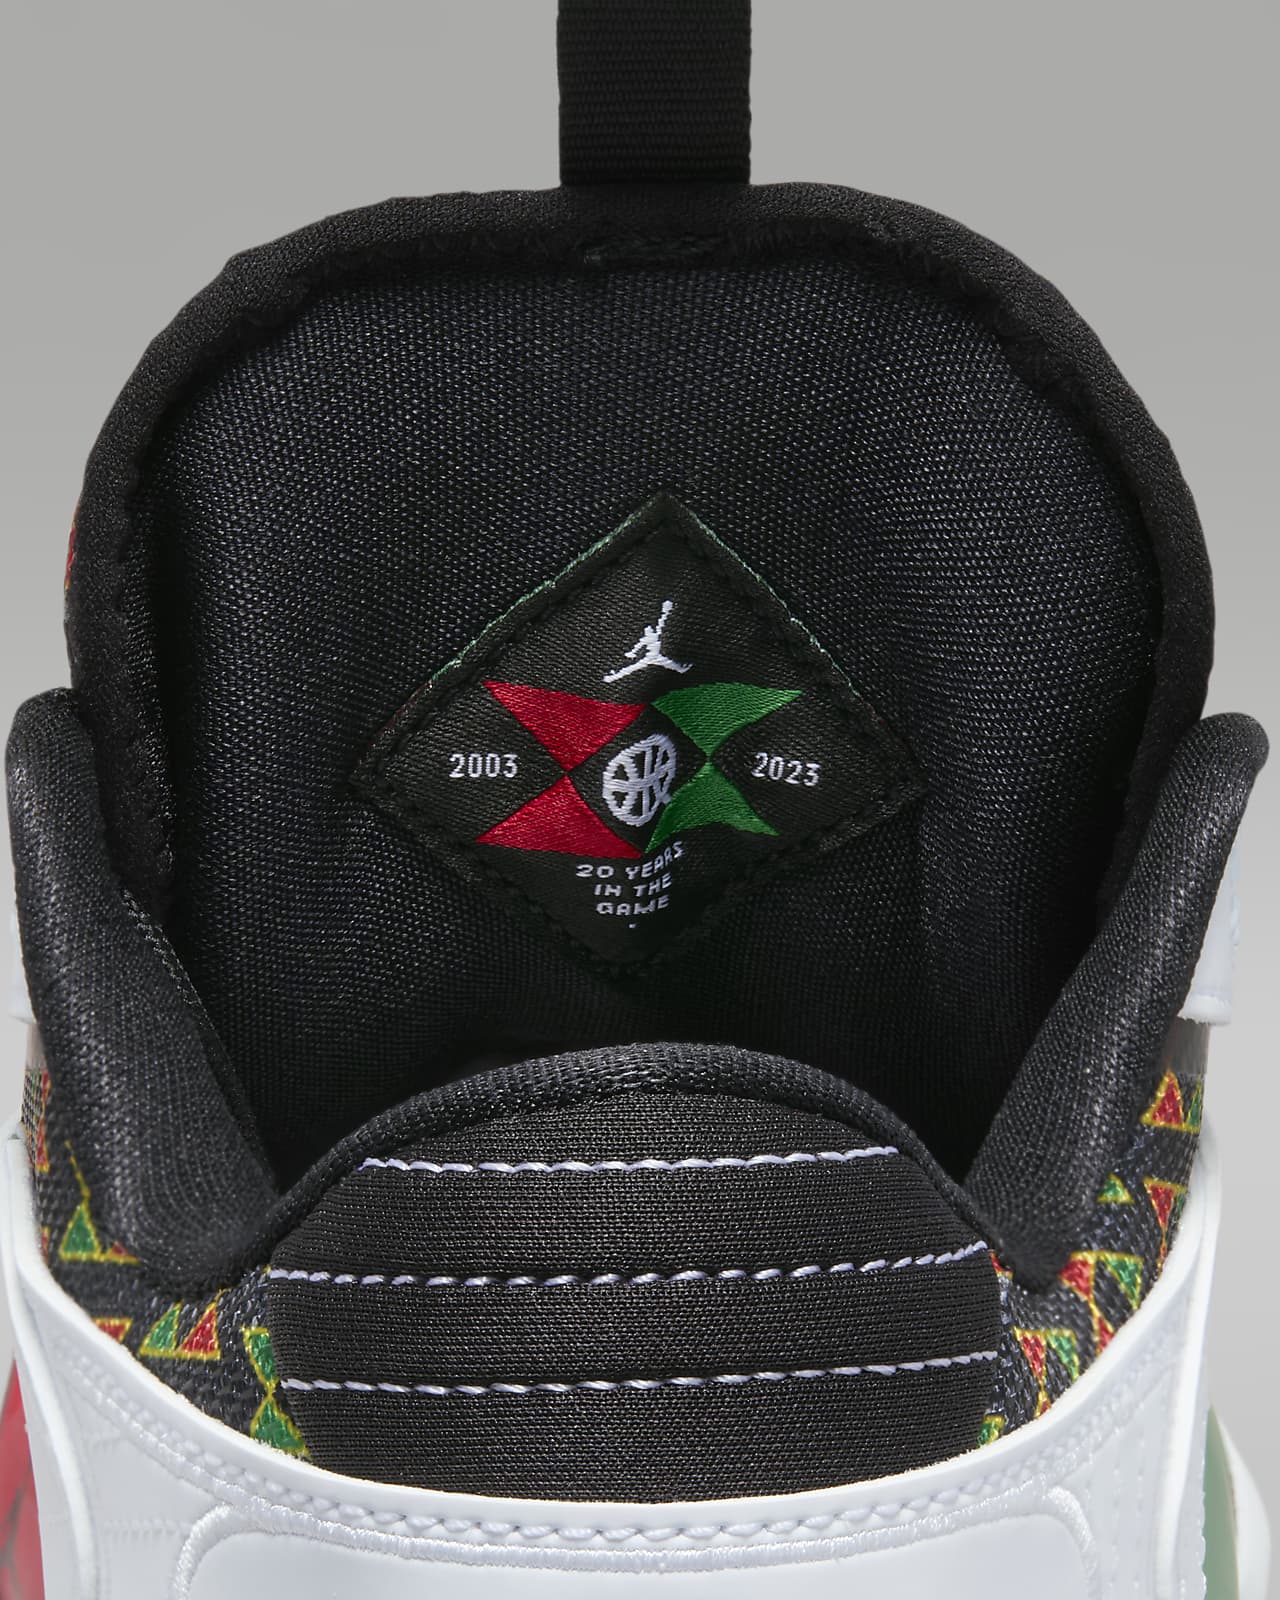 Peace-Themed Basketball Shoes : Nike Air Raid Retro